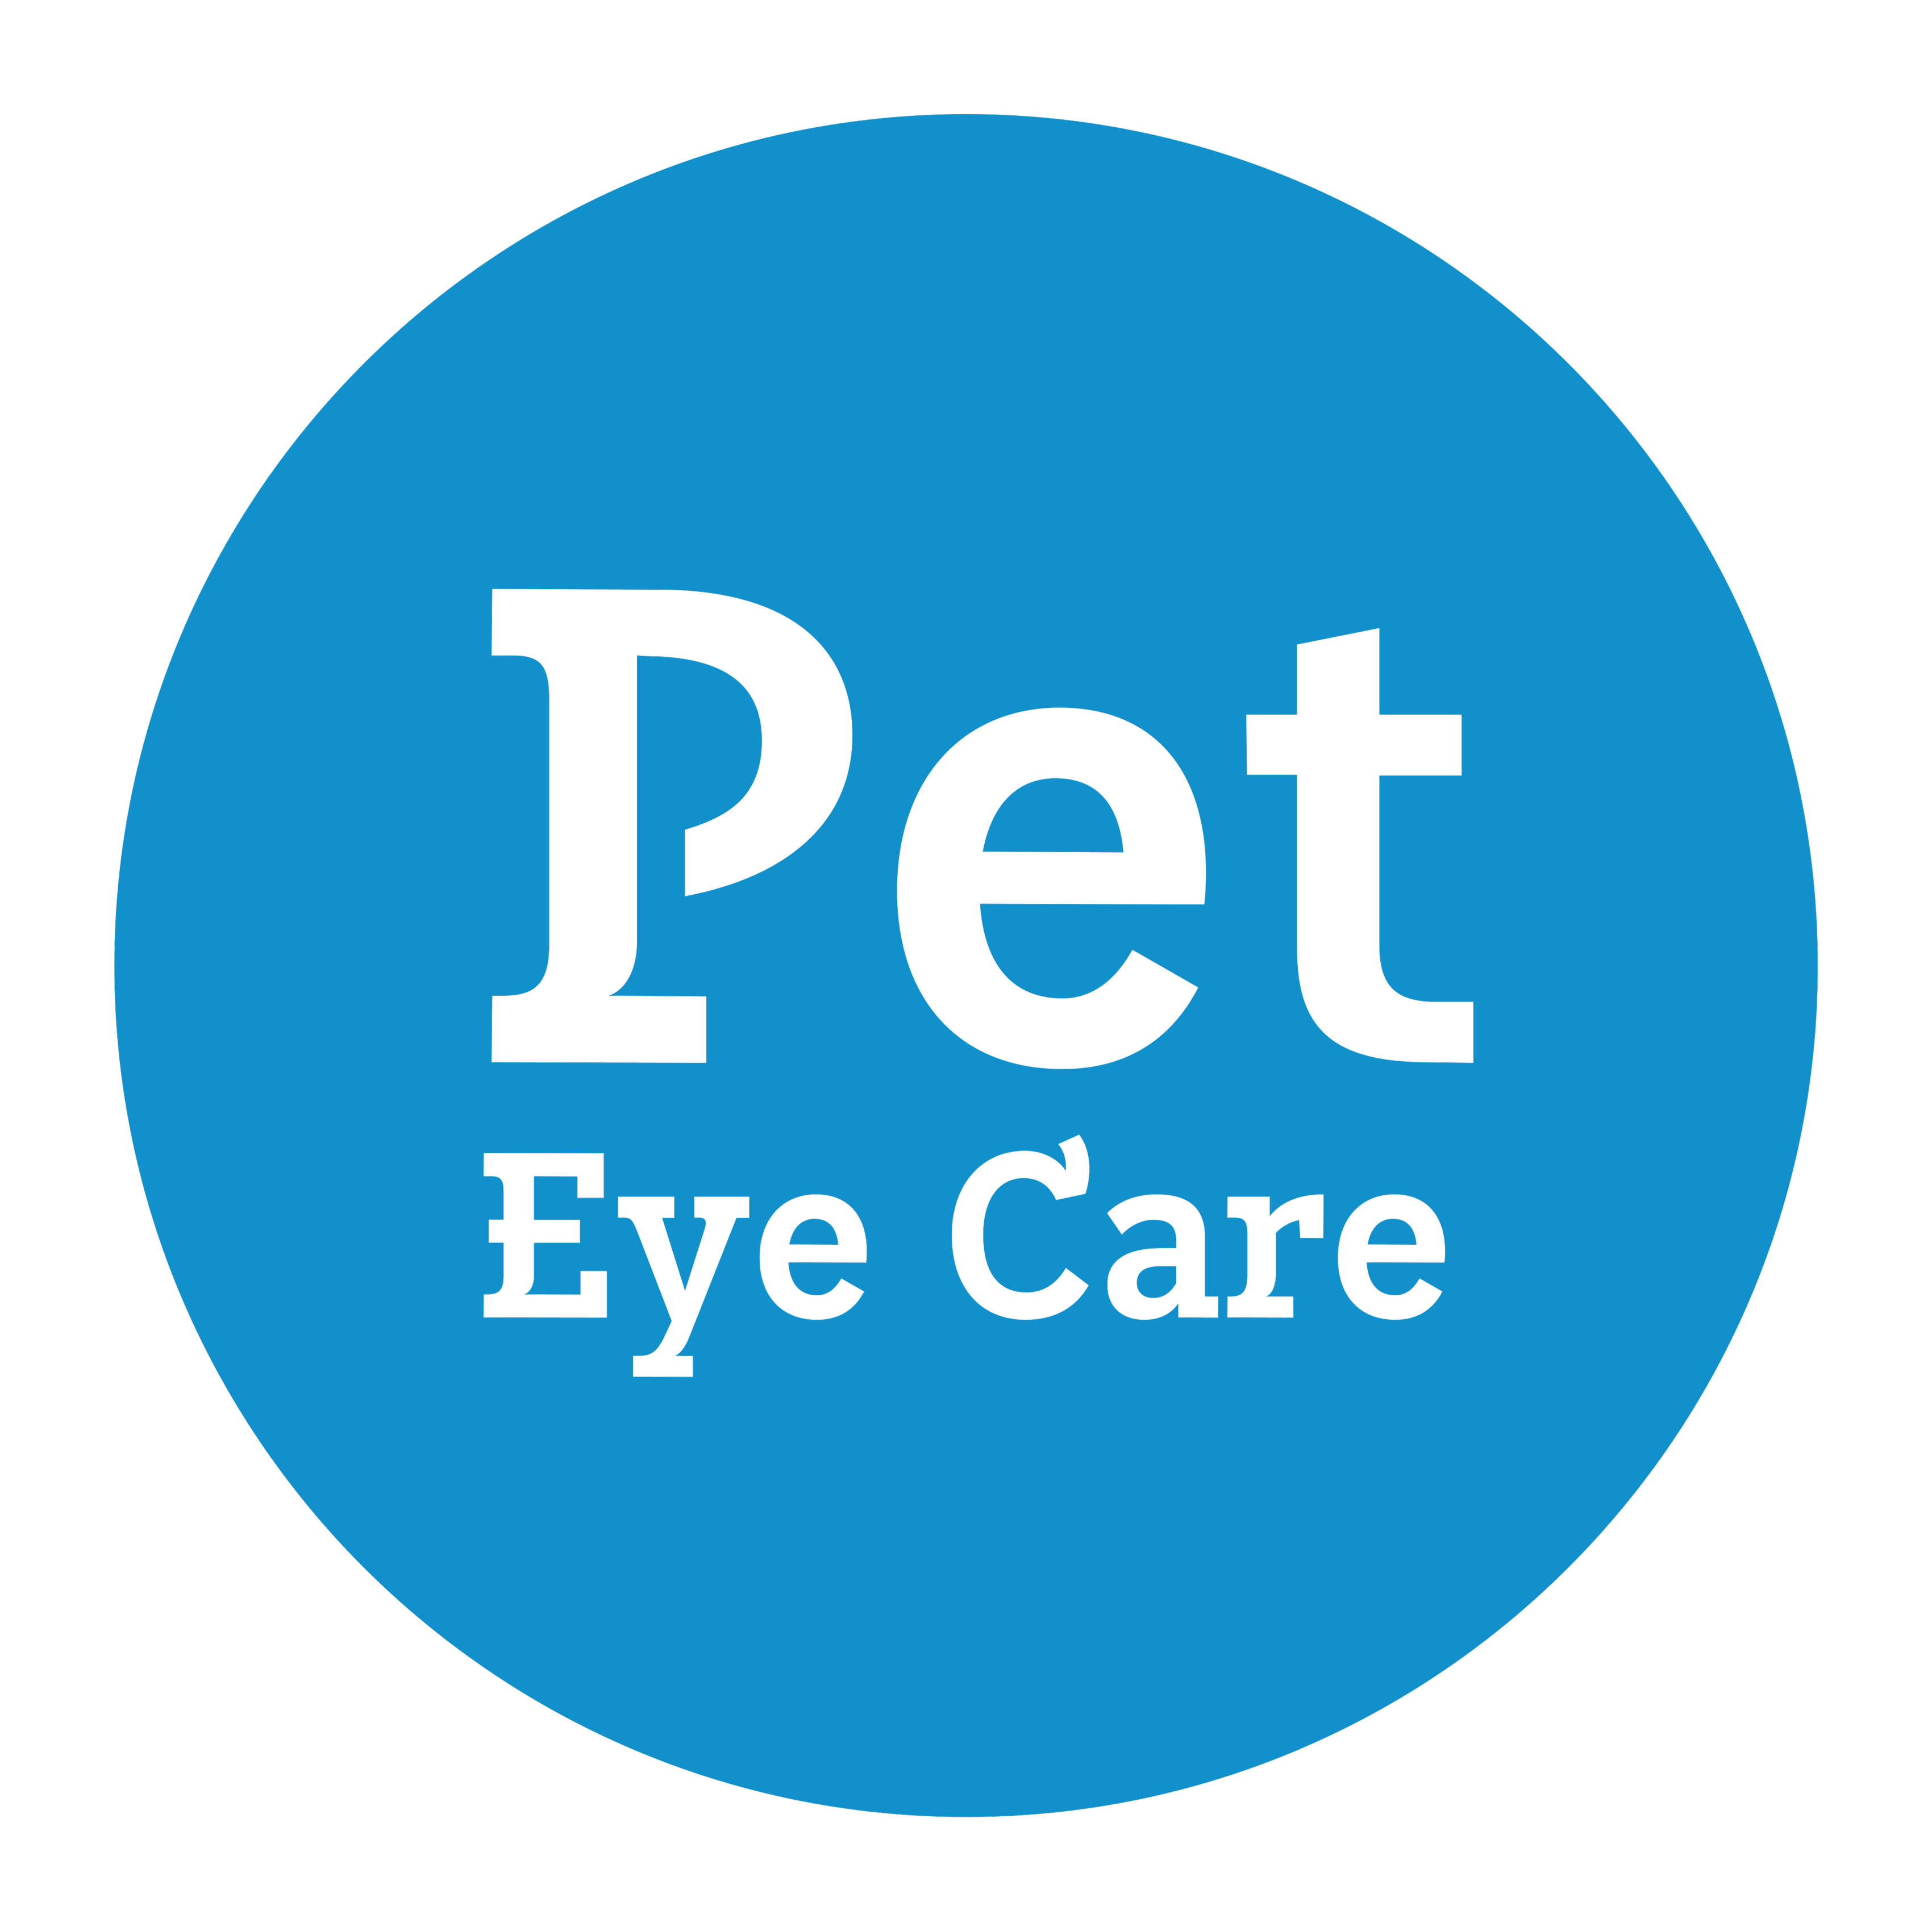 Pet Eye Care